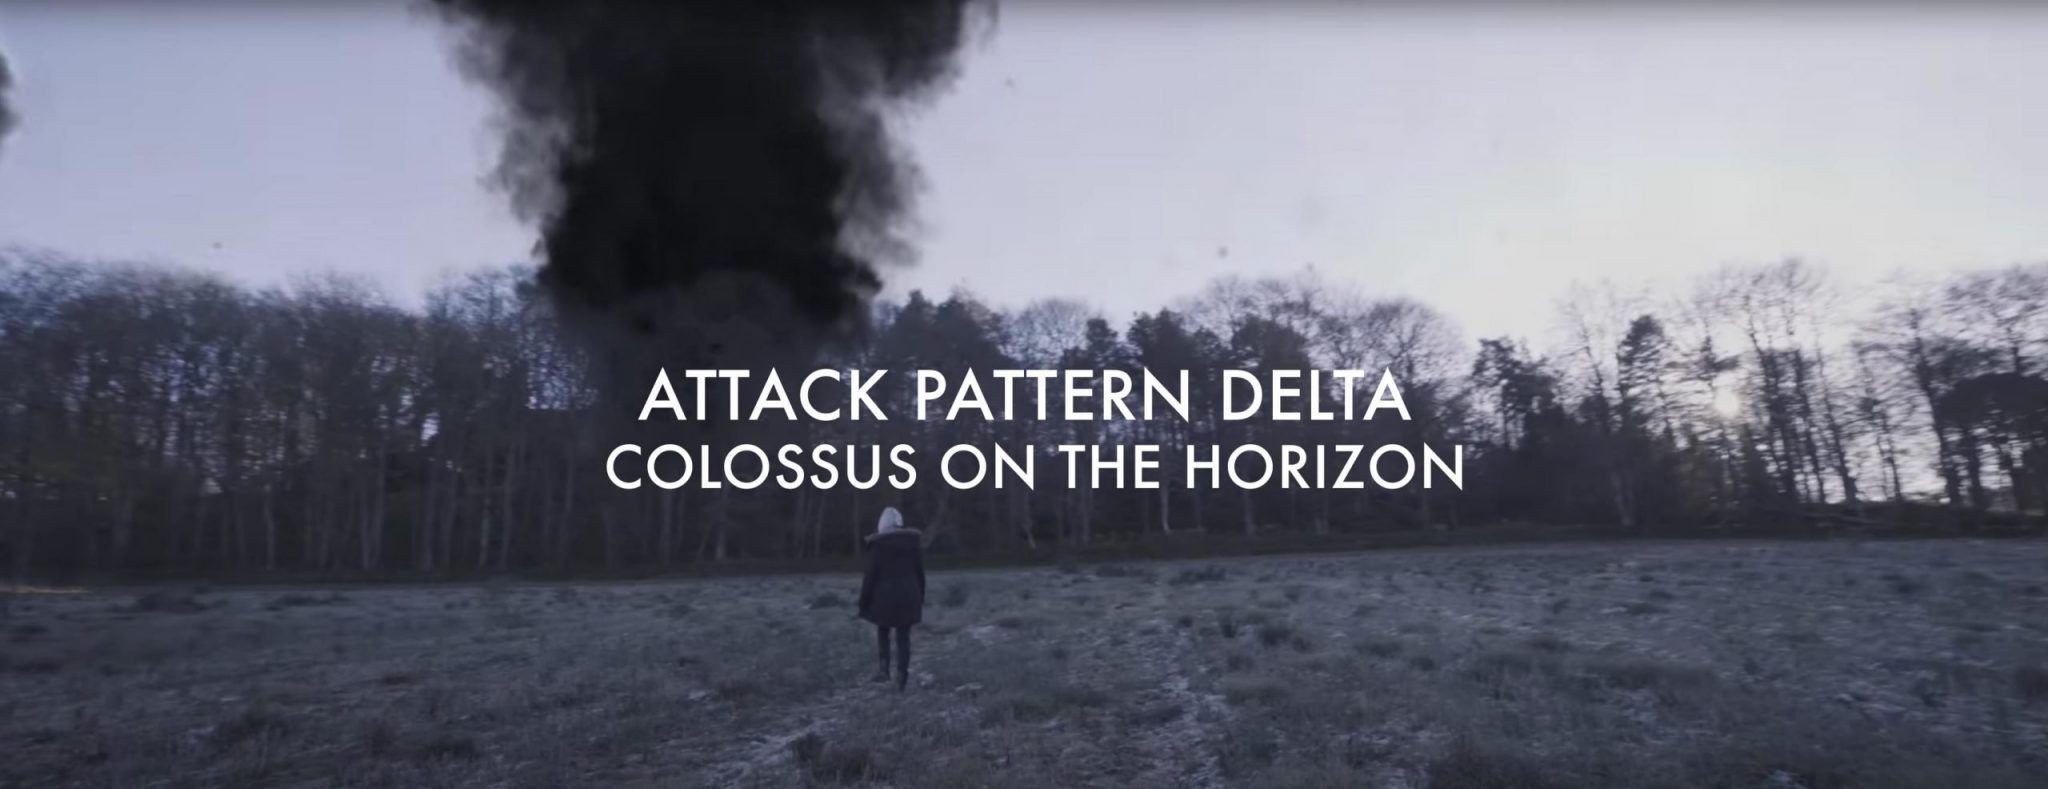 Attack Pattern Delta Music Video